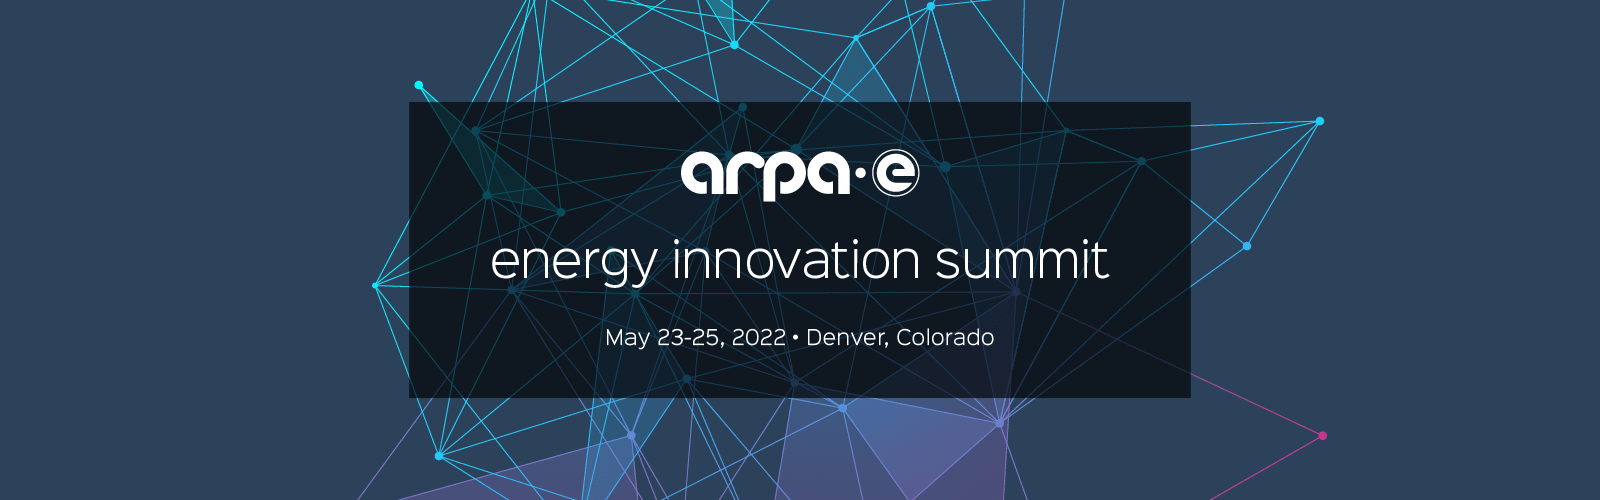 2022 ARPA-E Energy Innovation Summit Dates